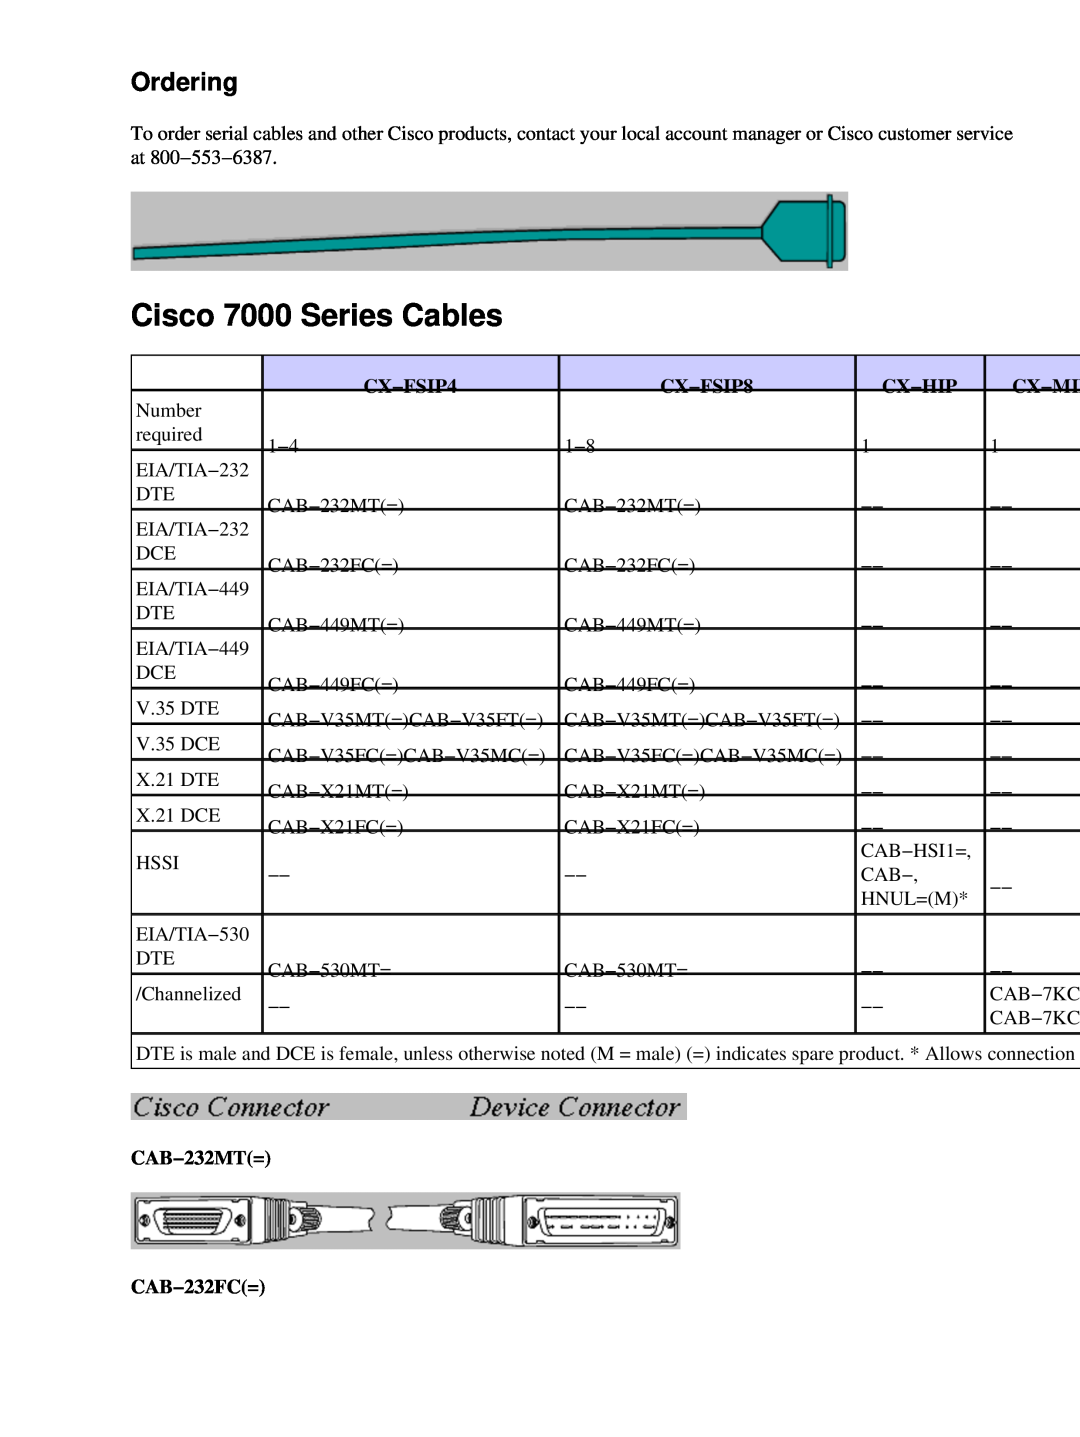 Cisco Systems 500-CS SERIES manual Cisco 7000 Series Cables, Ordering, CX−FSIP4, CX−FSIP8, Cx−Hip, CAB−232MT=, CAB−232FC= 